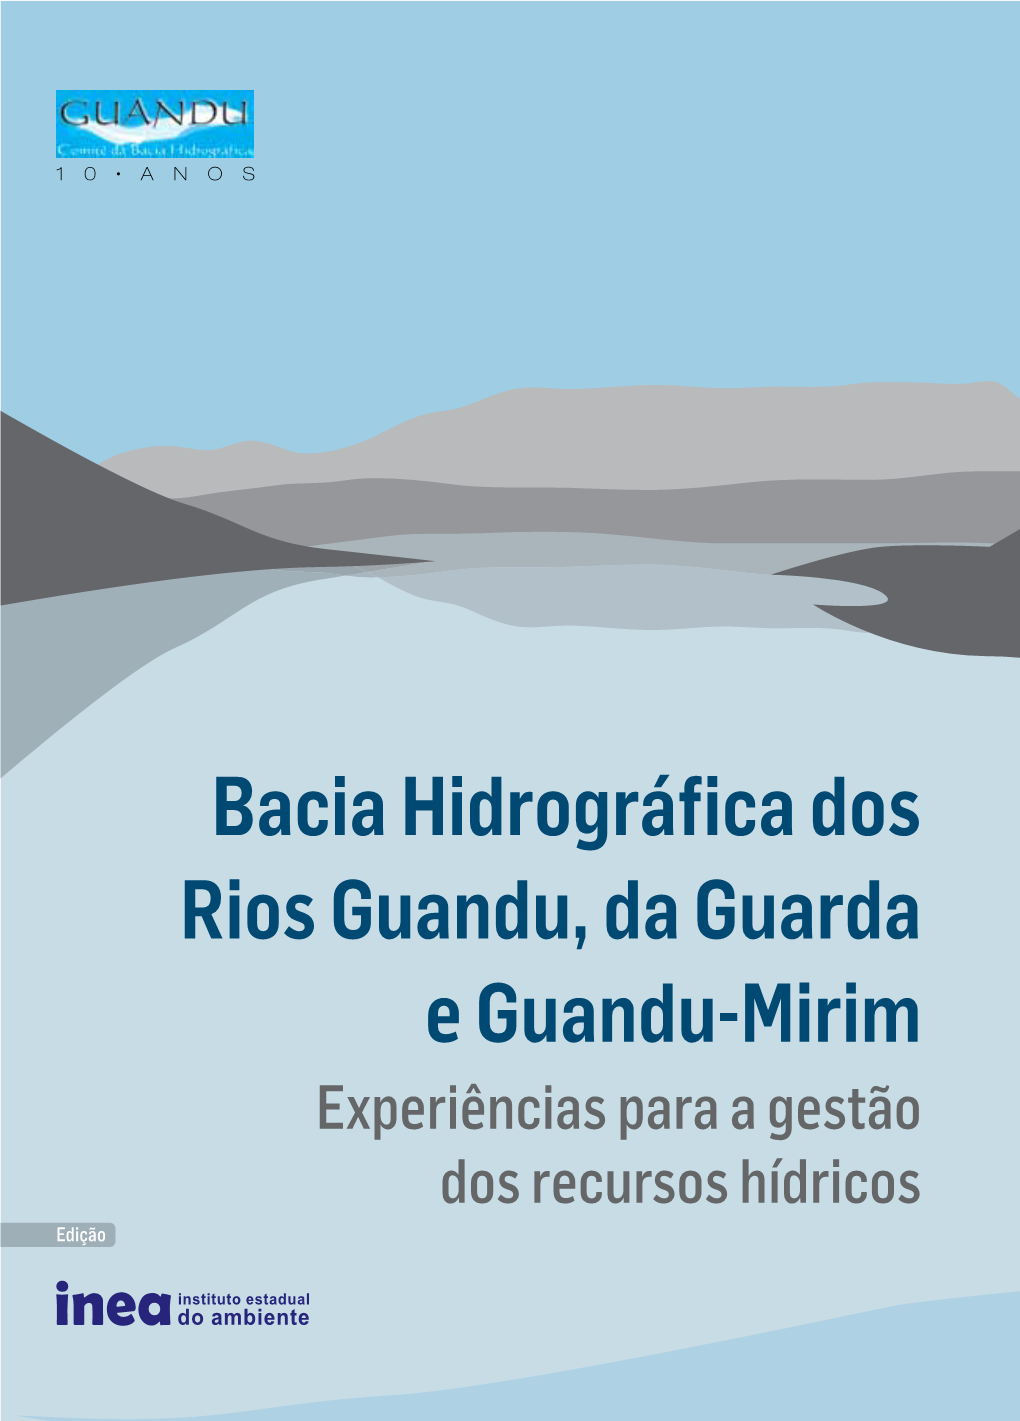 Bacia Hidrográfica Dos Rios Guandu, Da Guarda E Guandu-Mirim